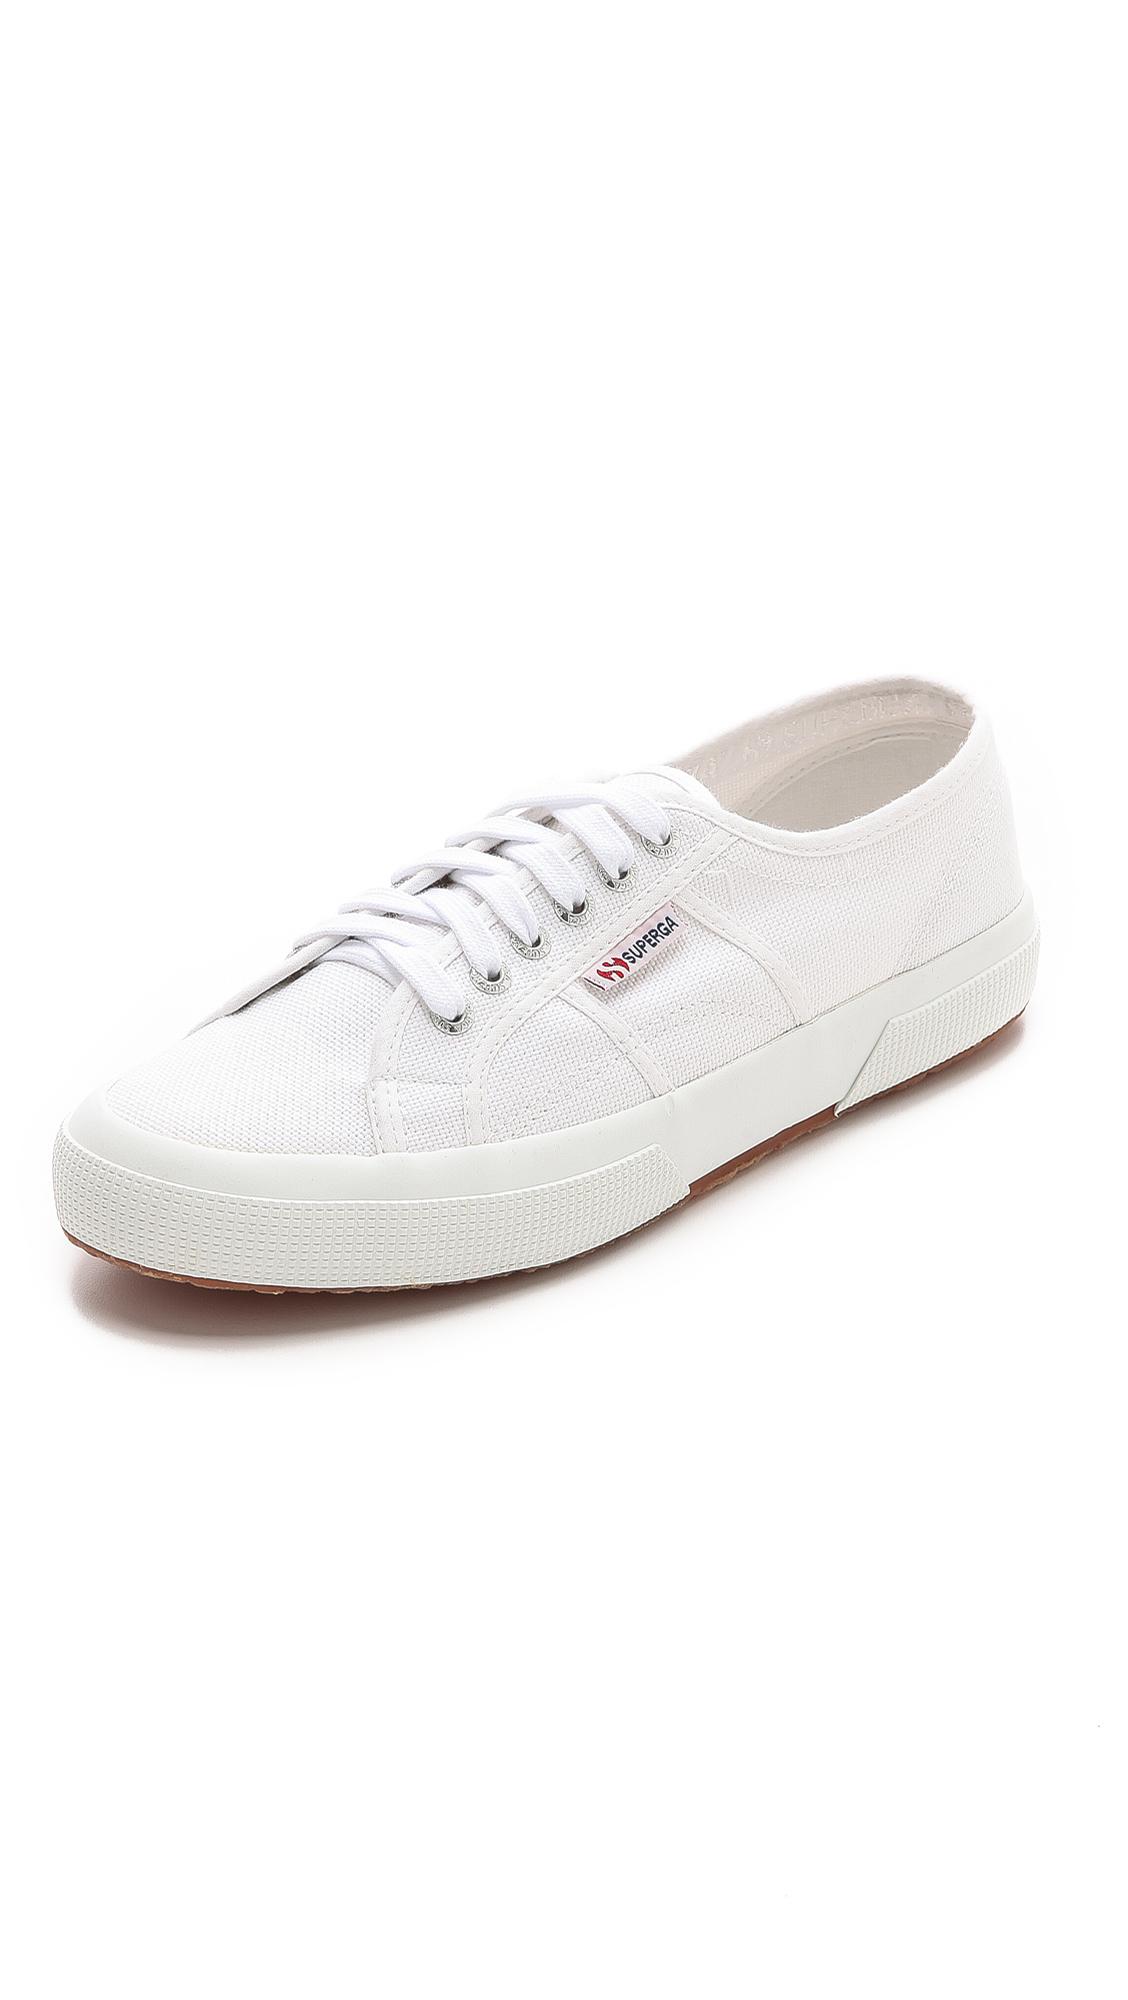 Lyst - Superga 2750 Cotu Classic Sneakers in White for Men